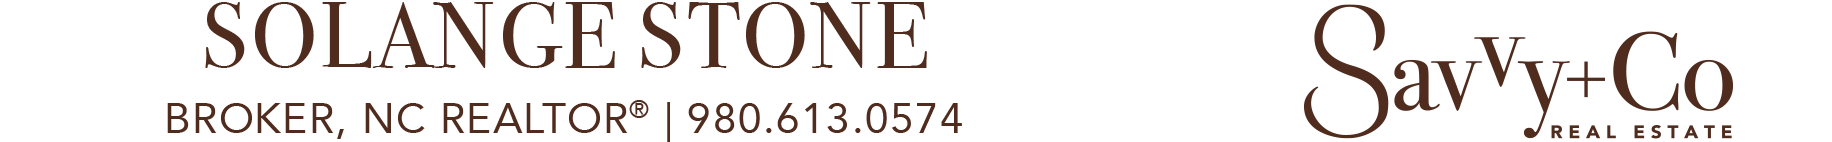 Solange Stone, Broker, NC REALTOR® Logo